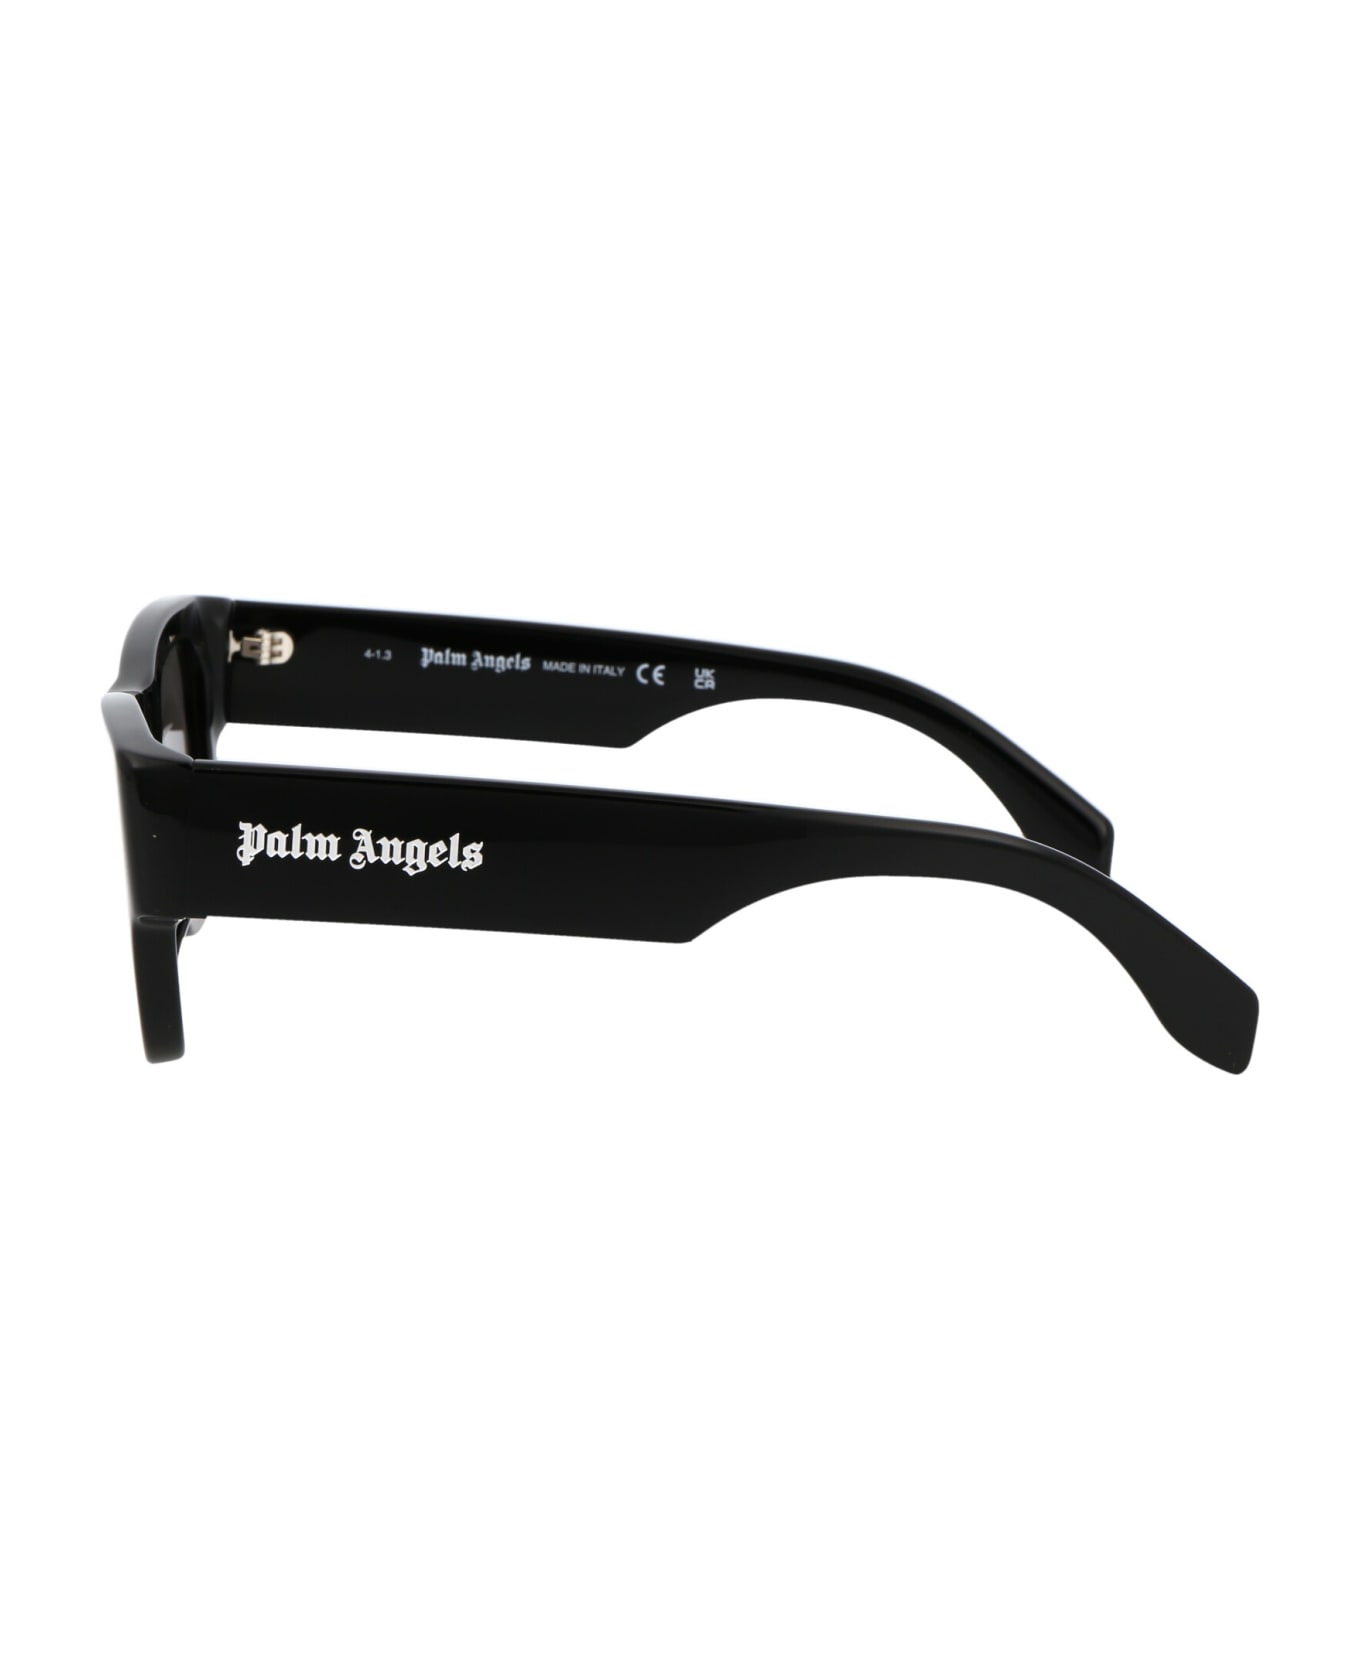 Palm Angels Volcan Sunglasses - 1072 buy ray ban pilot double bridge sunglasses